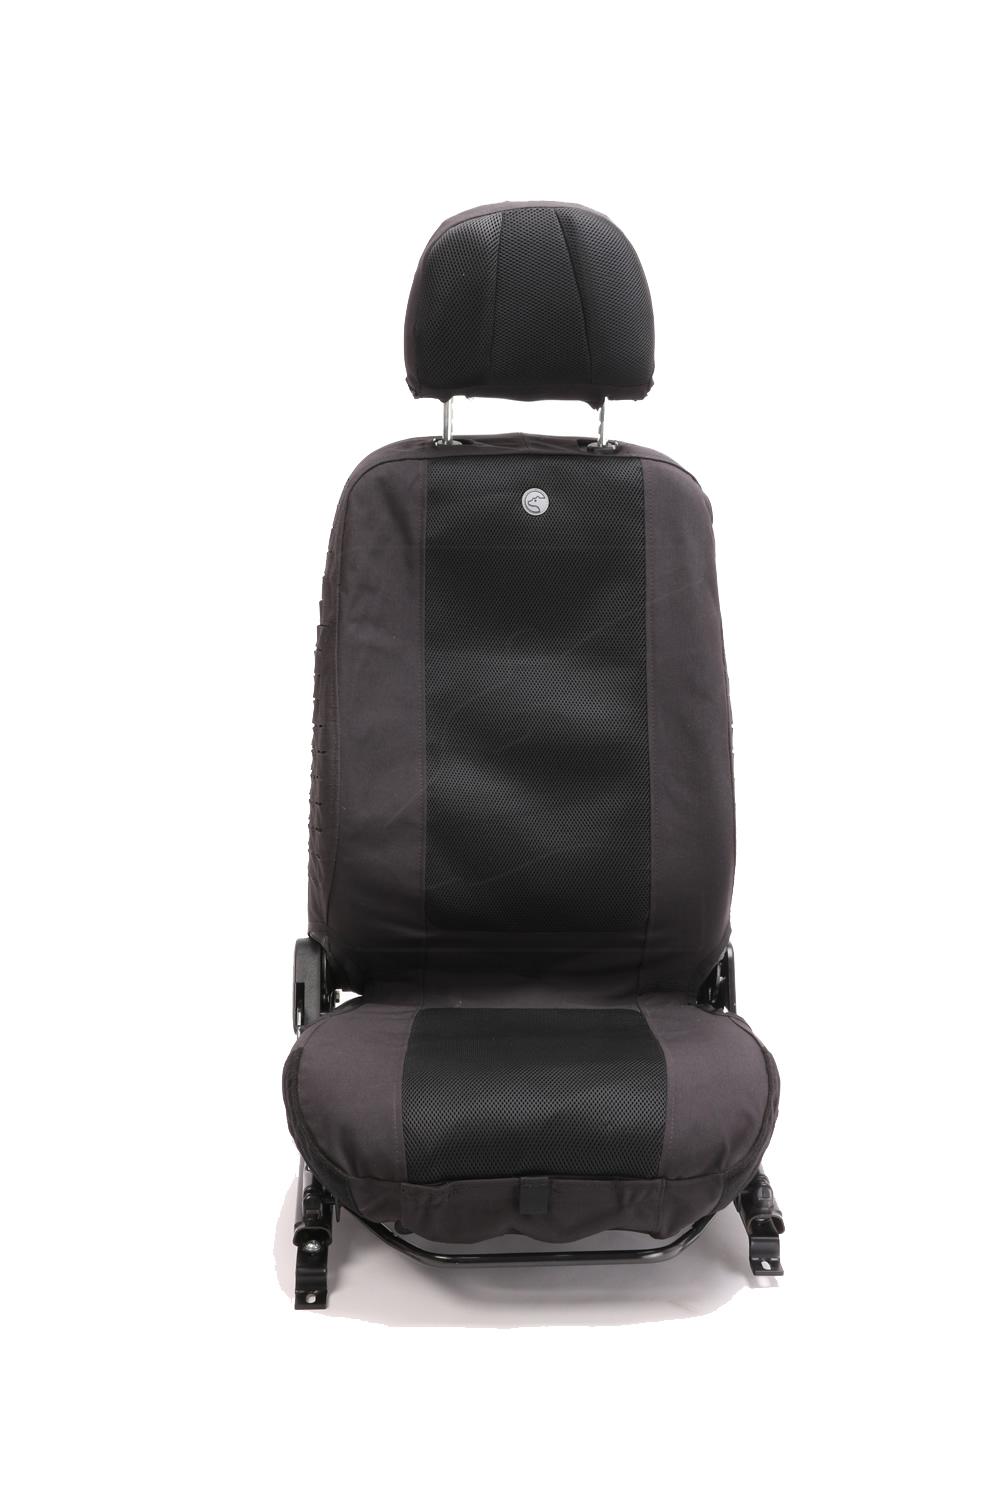 Cubre asiento Respaldo Transpirable Protector Asiento para coche 1 Und.  MOLCAR